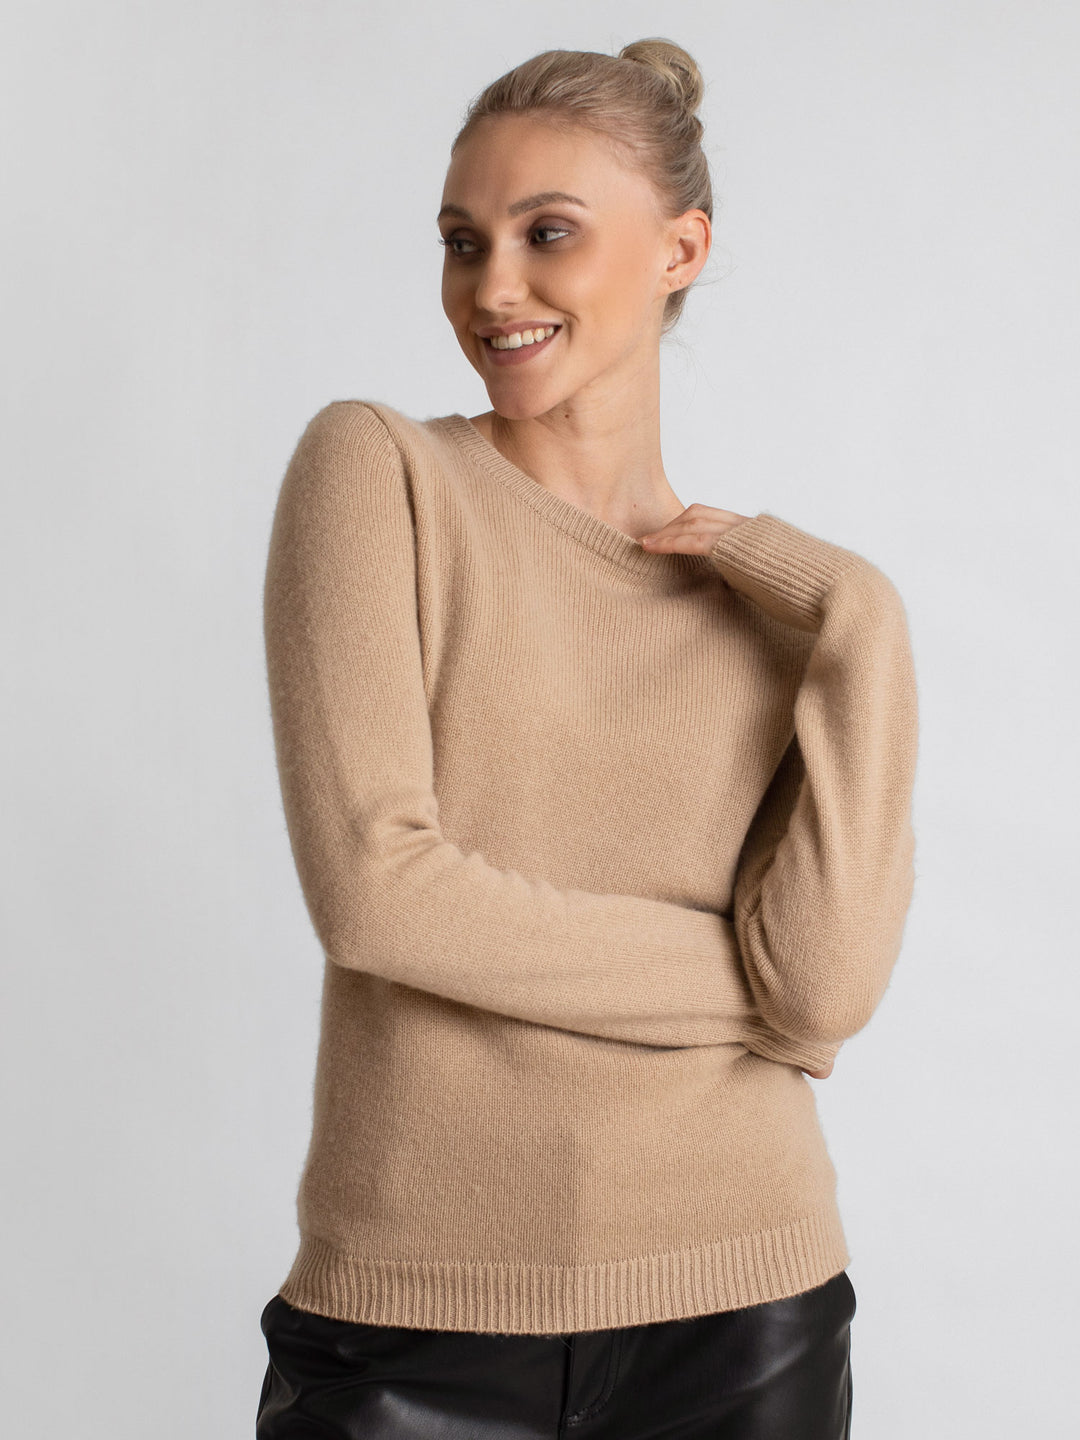 cashmere sweater sand beige luxury kashmina norwegian design sustainable fashion